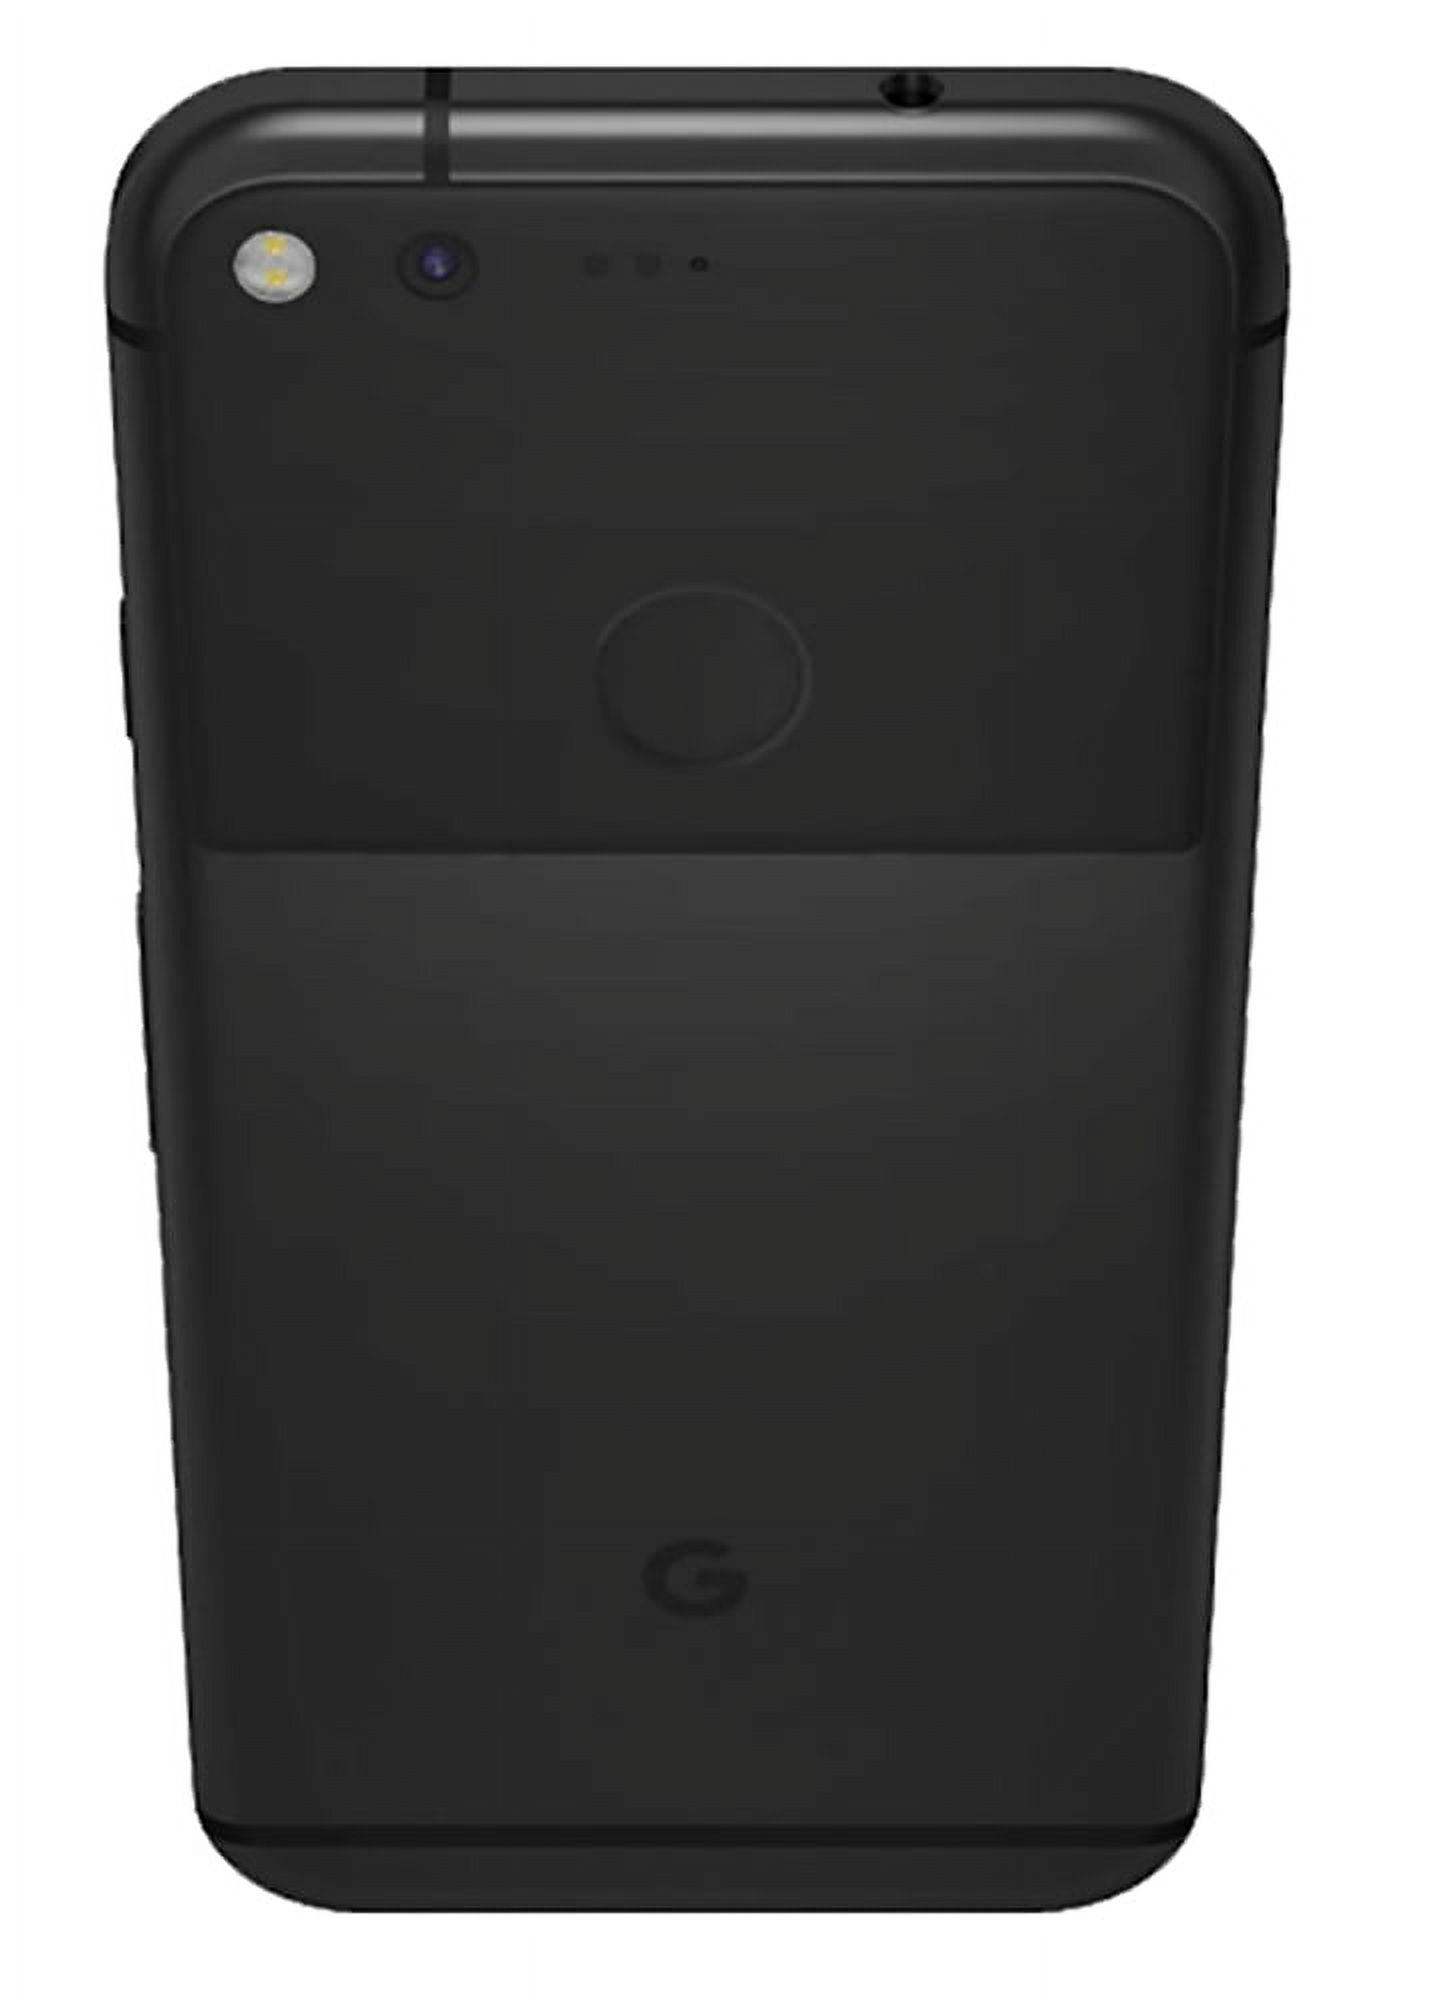 Google Pixel Phone 128 GB - 5 inch Display (Factory Unlocked US Version) (Quite Black) - image 4 of 6